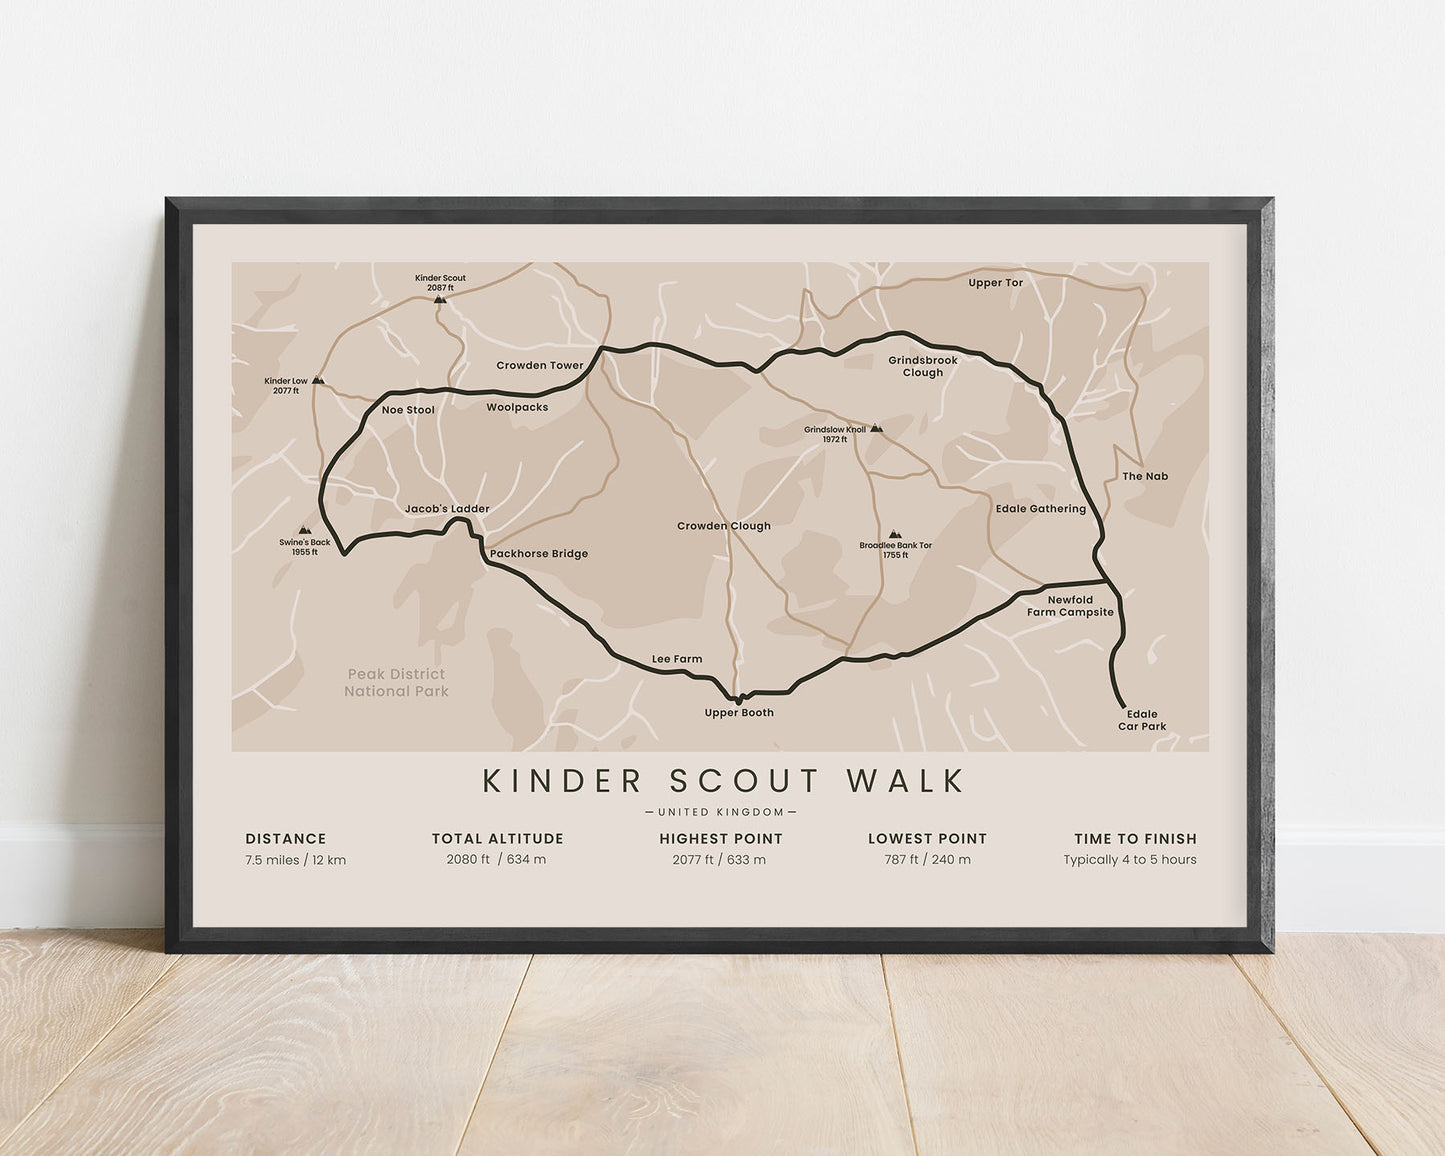 Kinder Scout Circular Walk (United Kingdom) hike art with beige background